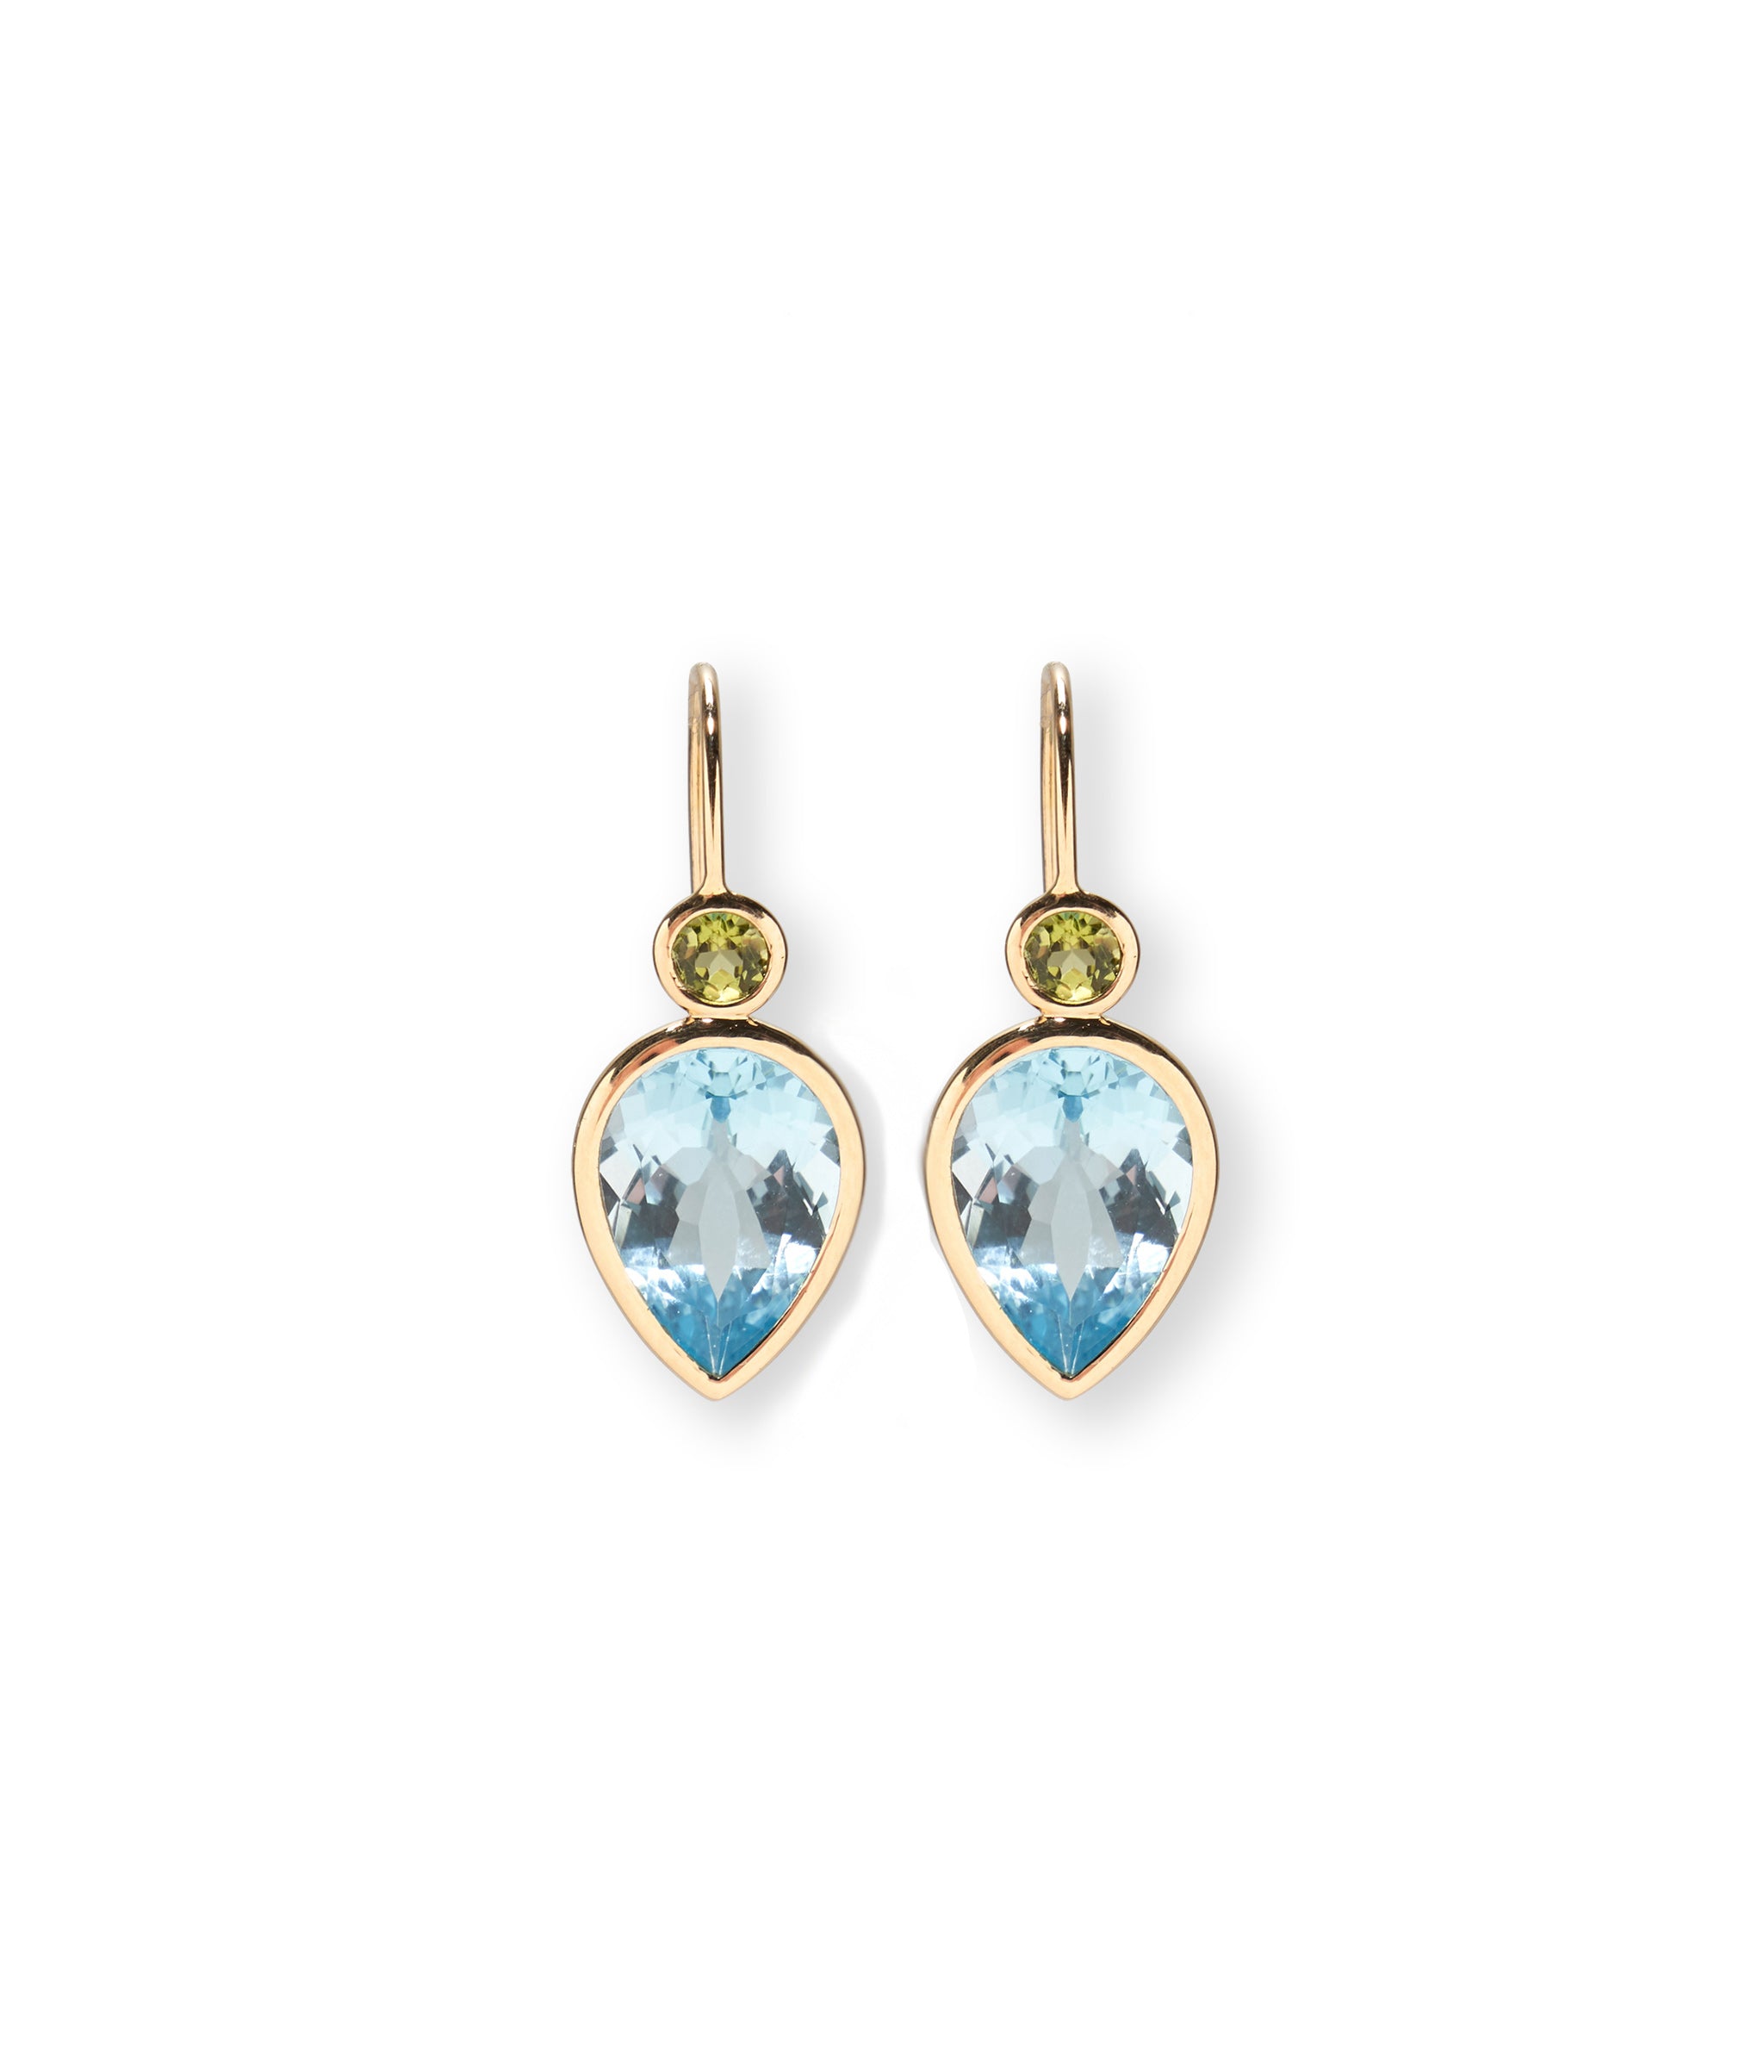 Hera Earrings in Sky Blue Topaz. Faceted pear-shaped sky blue topaz stones, enrobed in 14k gold bezels.